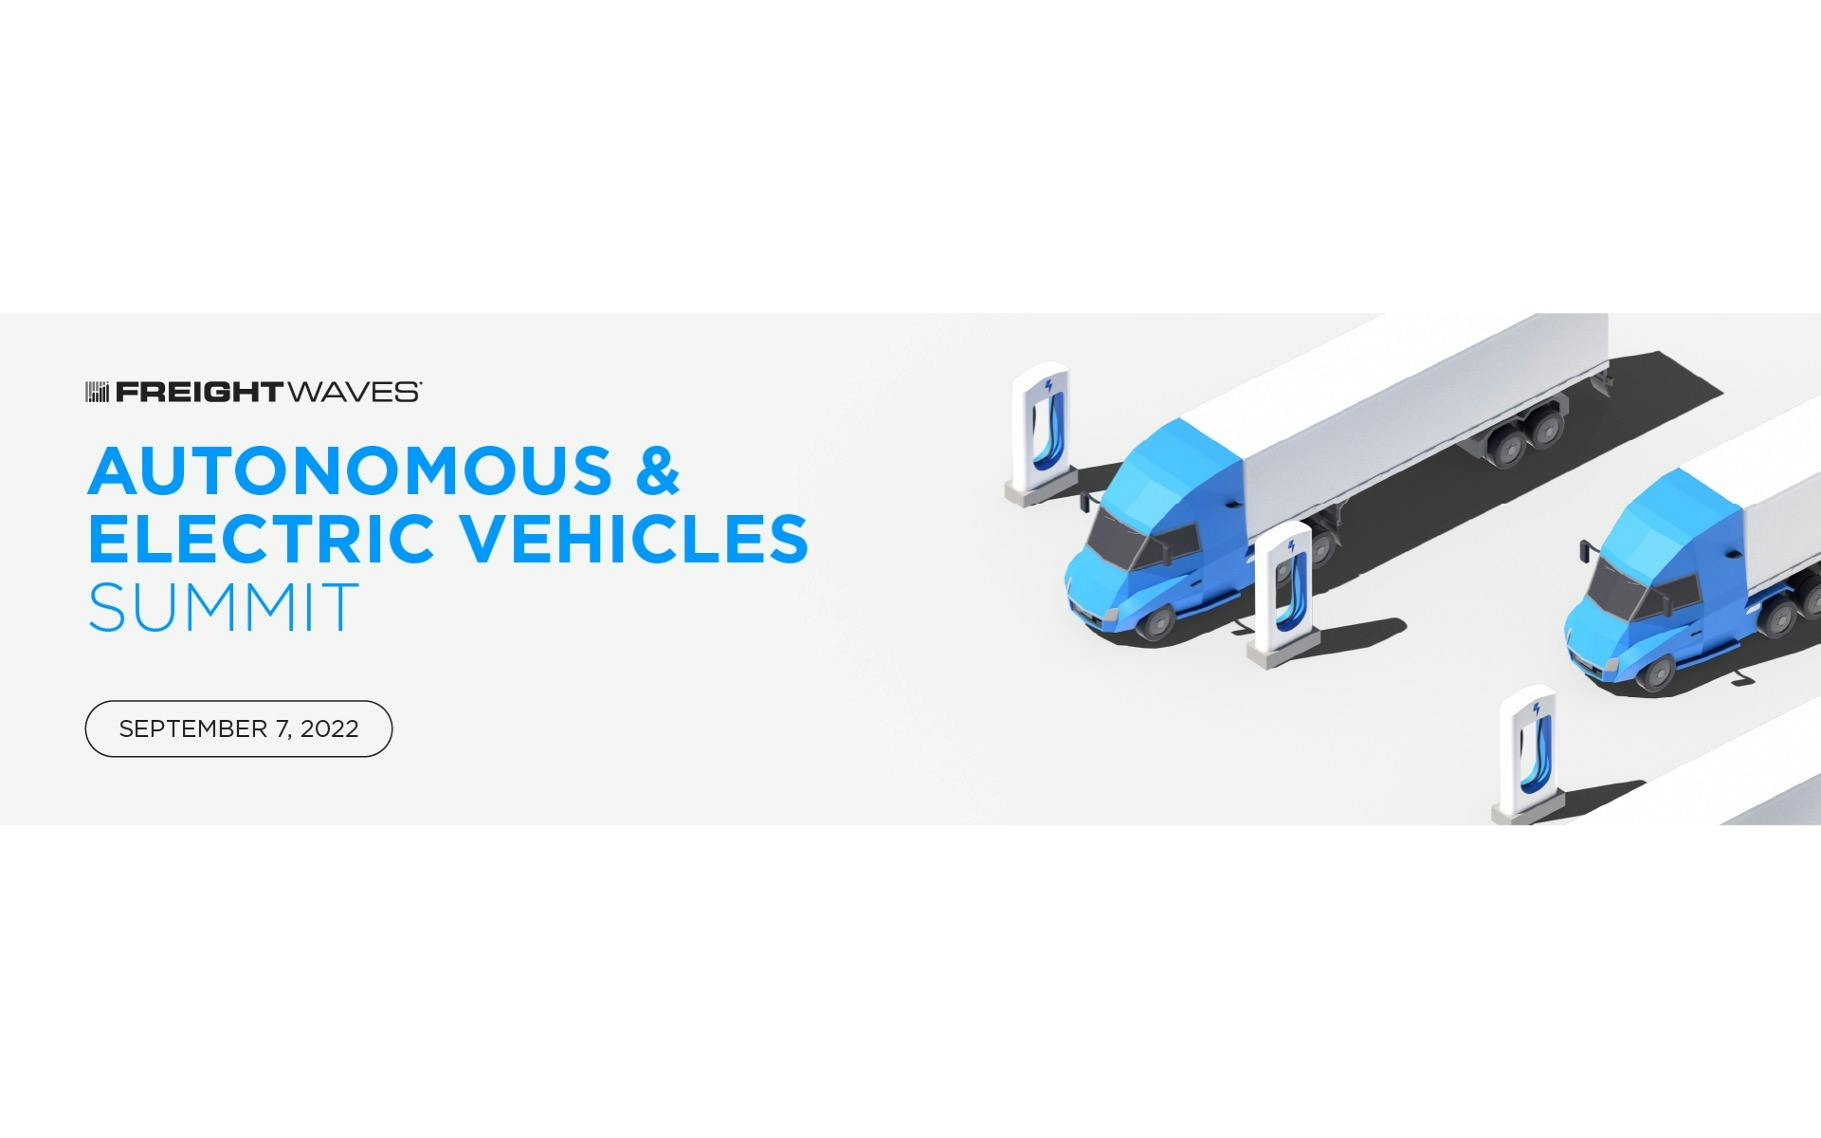 Autonomous & Electric Vehicle Summit logo with illustrated trucks charging